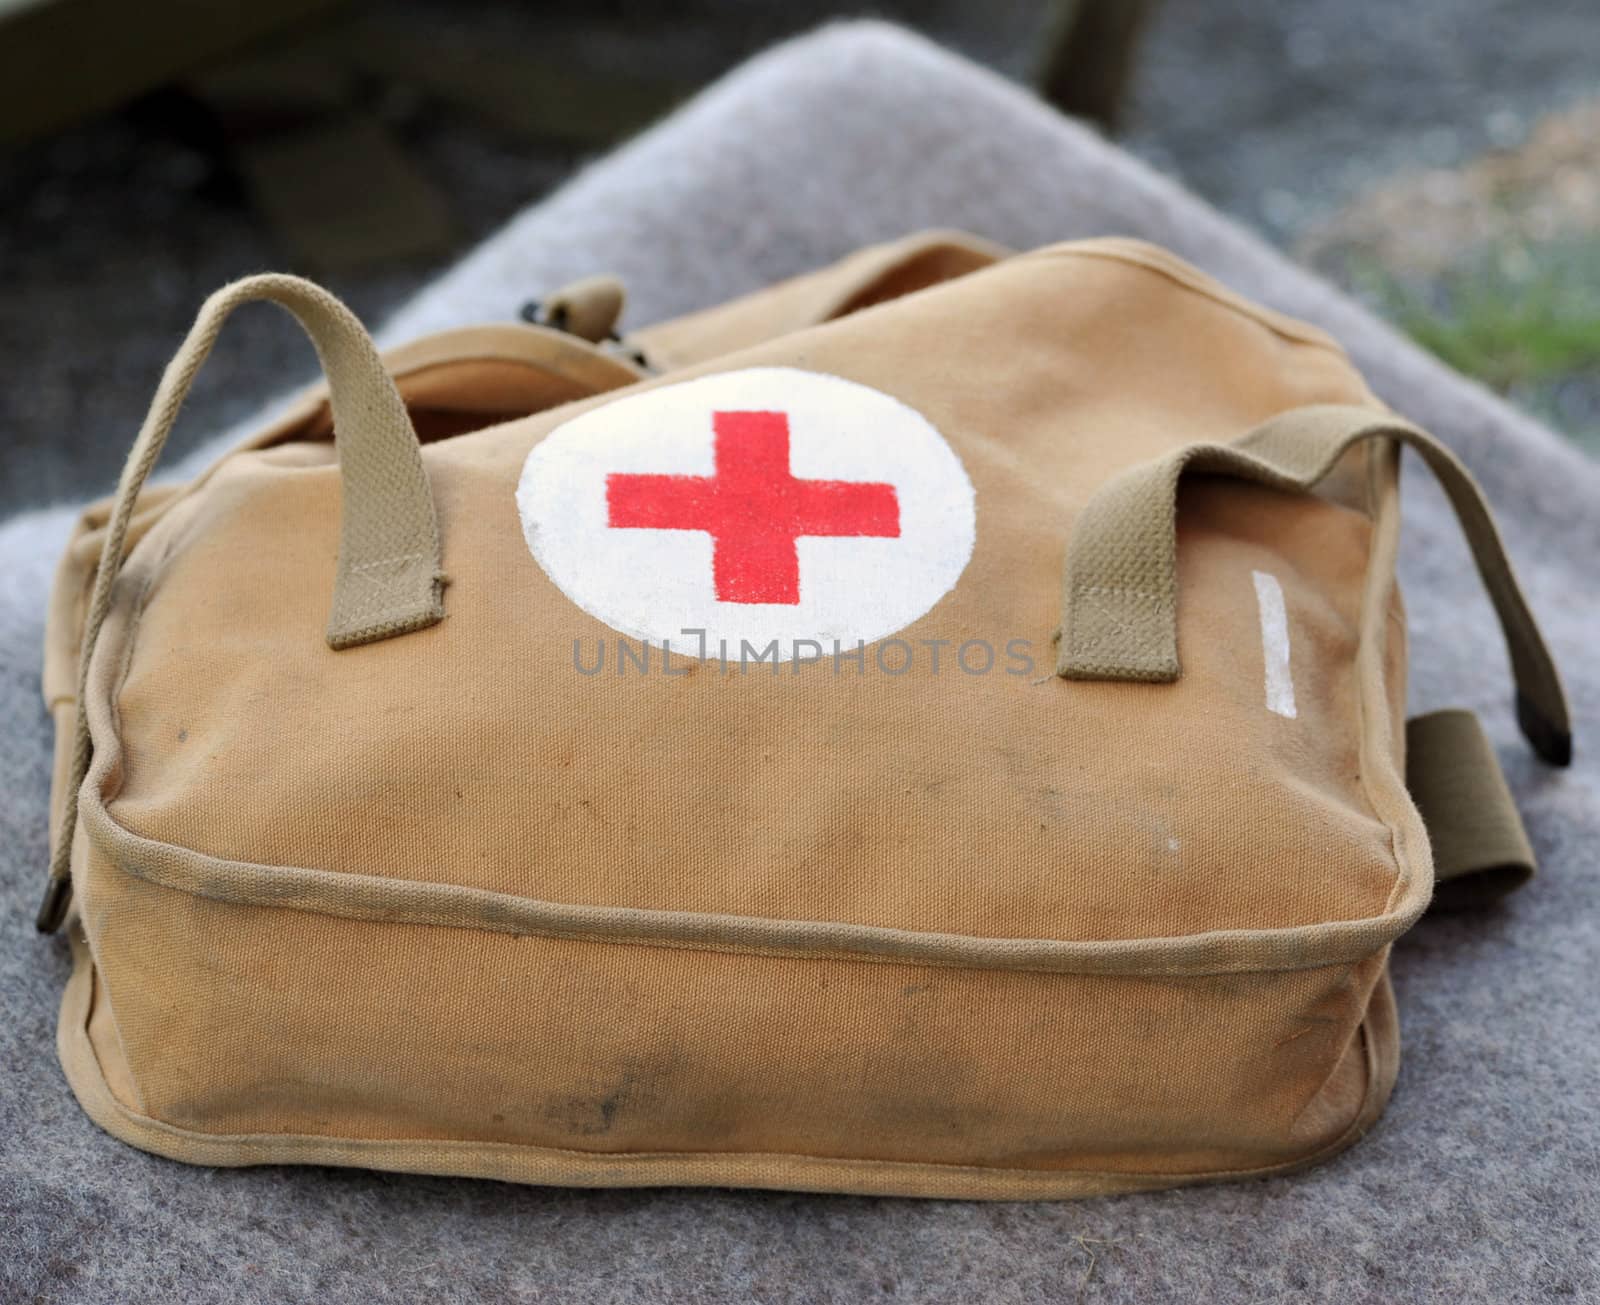 First aid bag by Espevalen